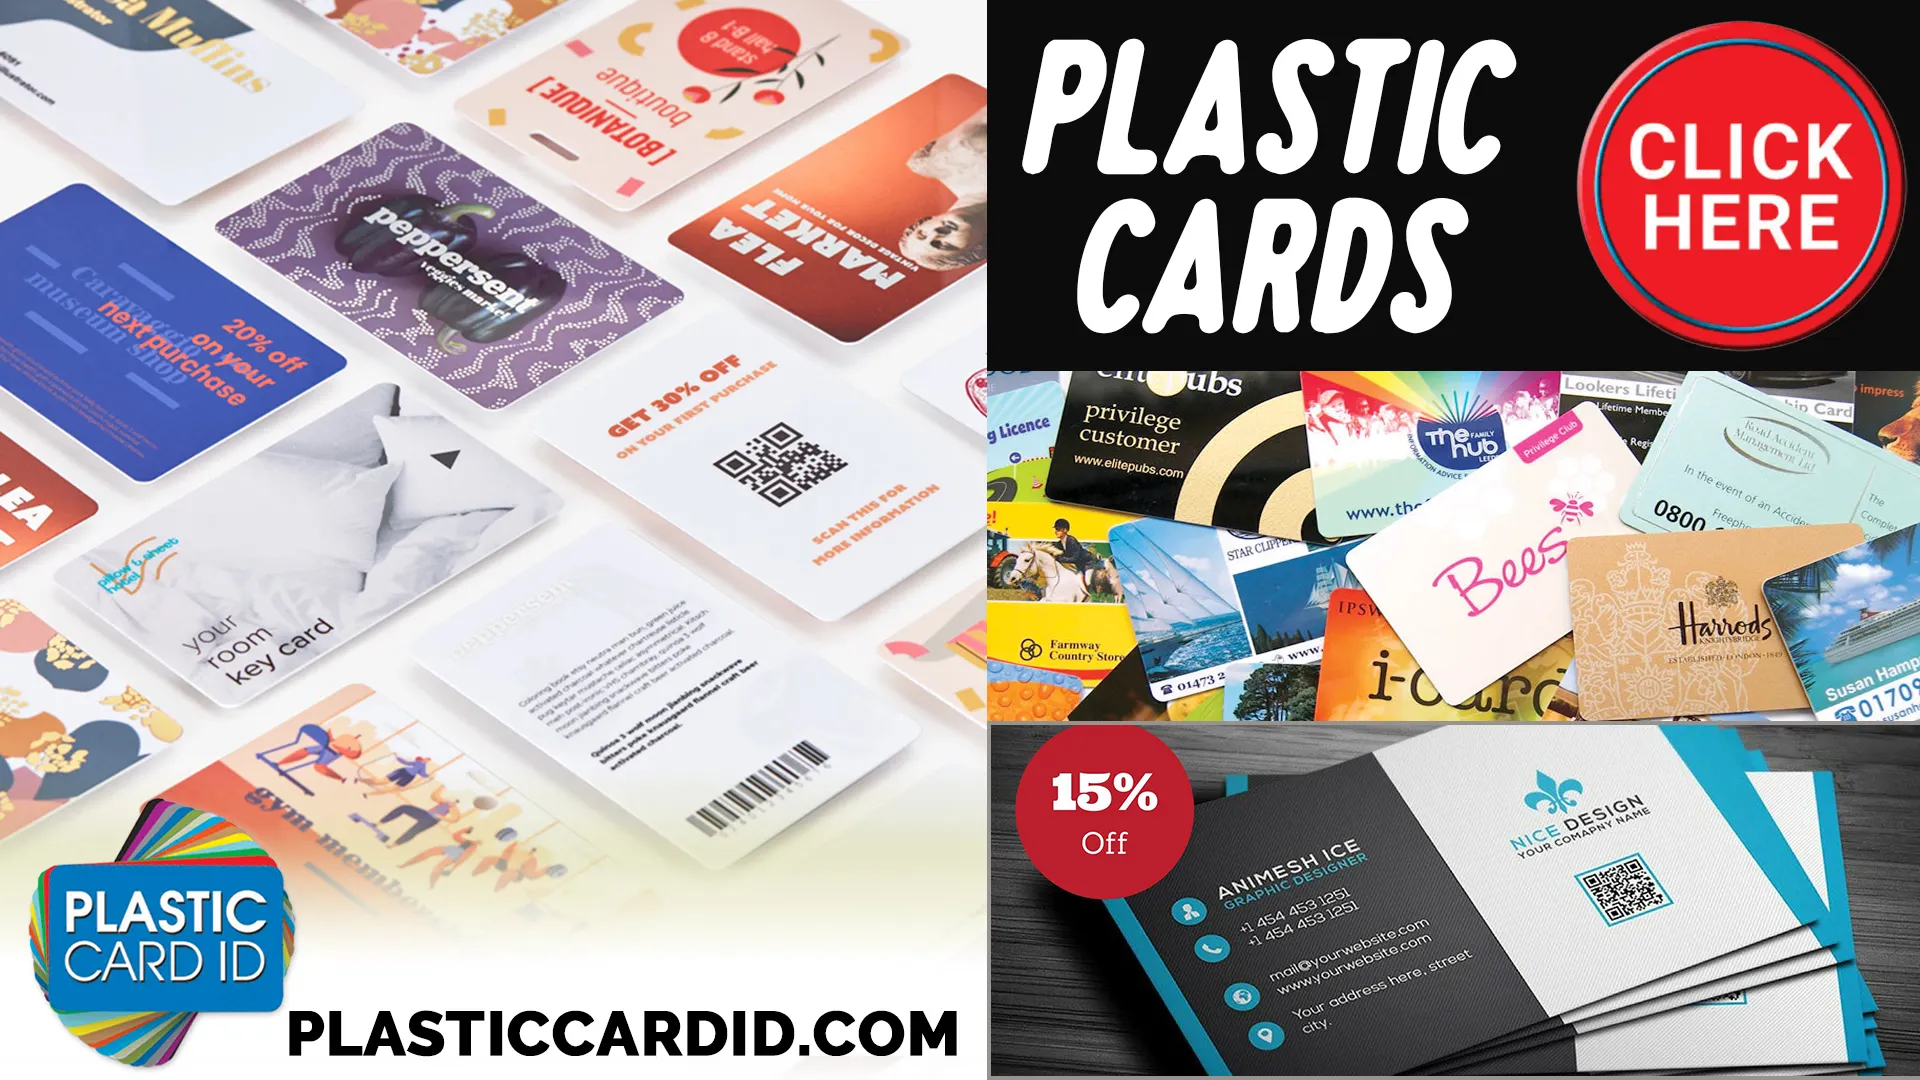 Why Go Digital with Plastic Card ID
?